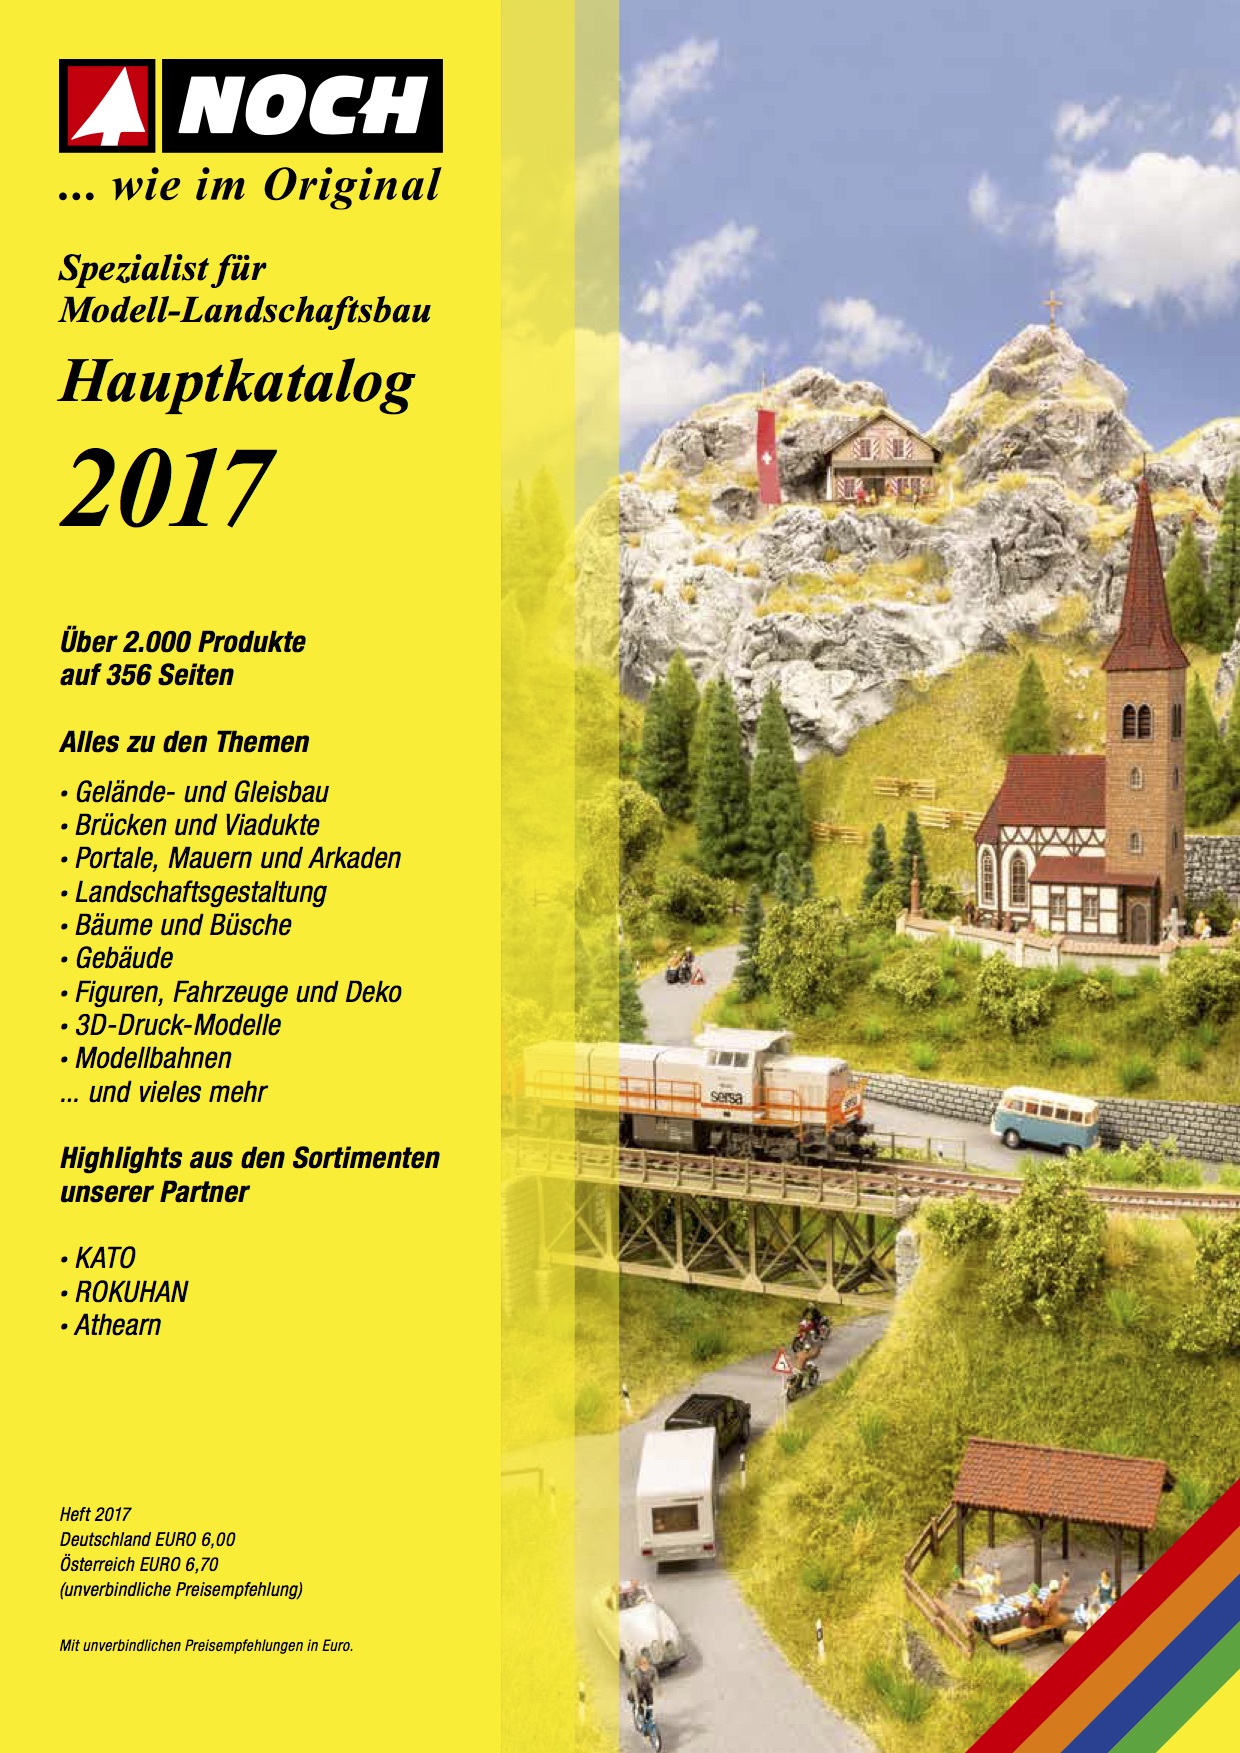 NOCH Katalog (Catalogue) 2017